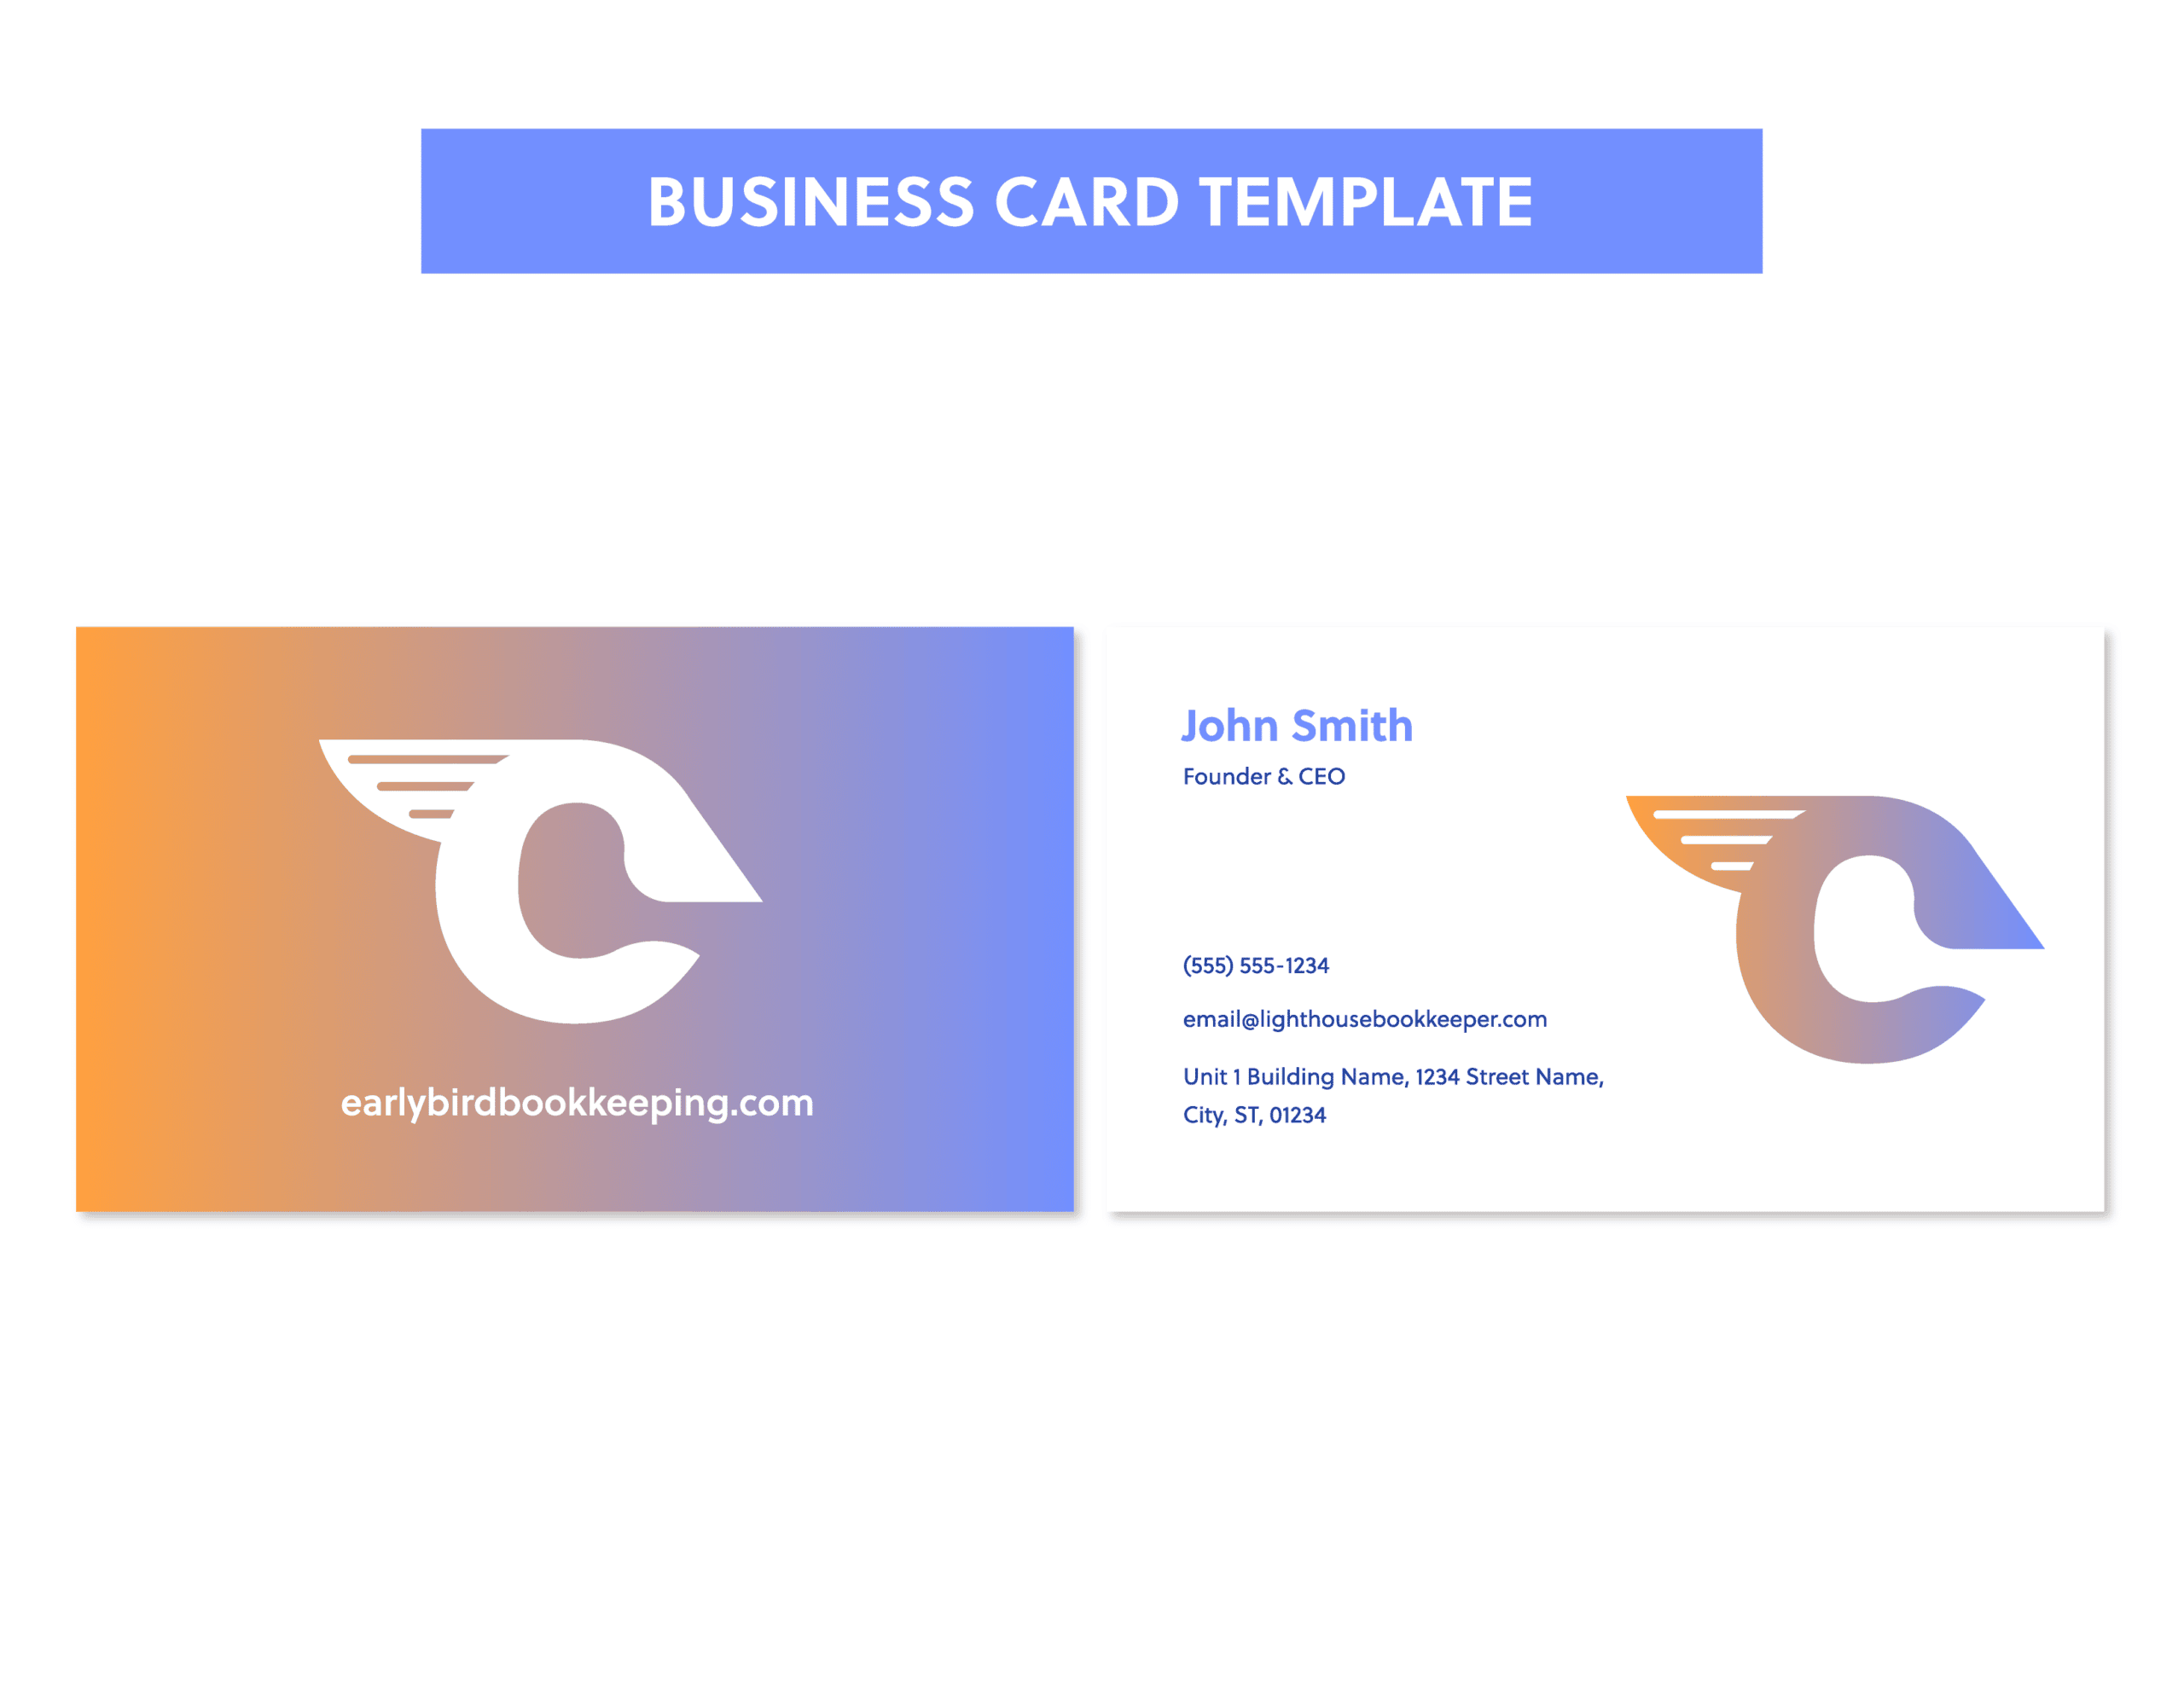 04EarlyBirdBK_Showcase_Business Card Template